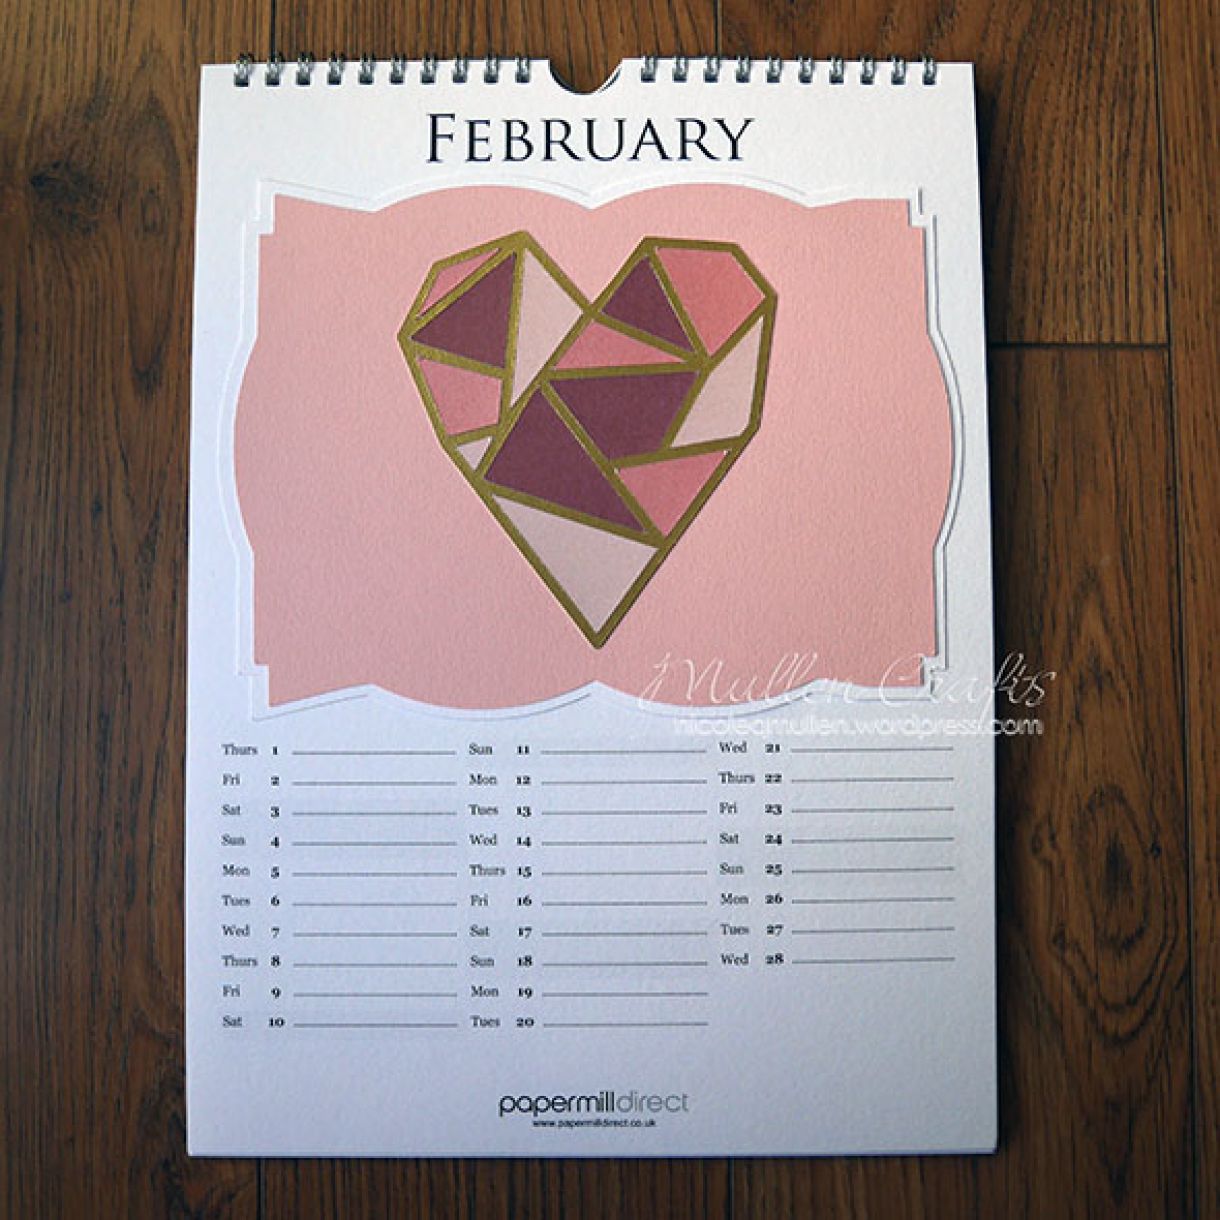 Nicole 2018 Calendar February1